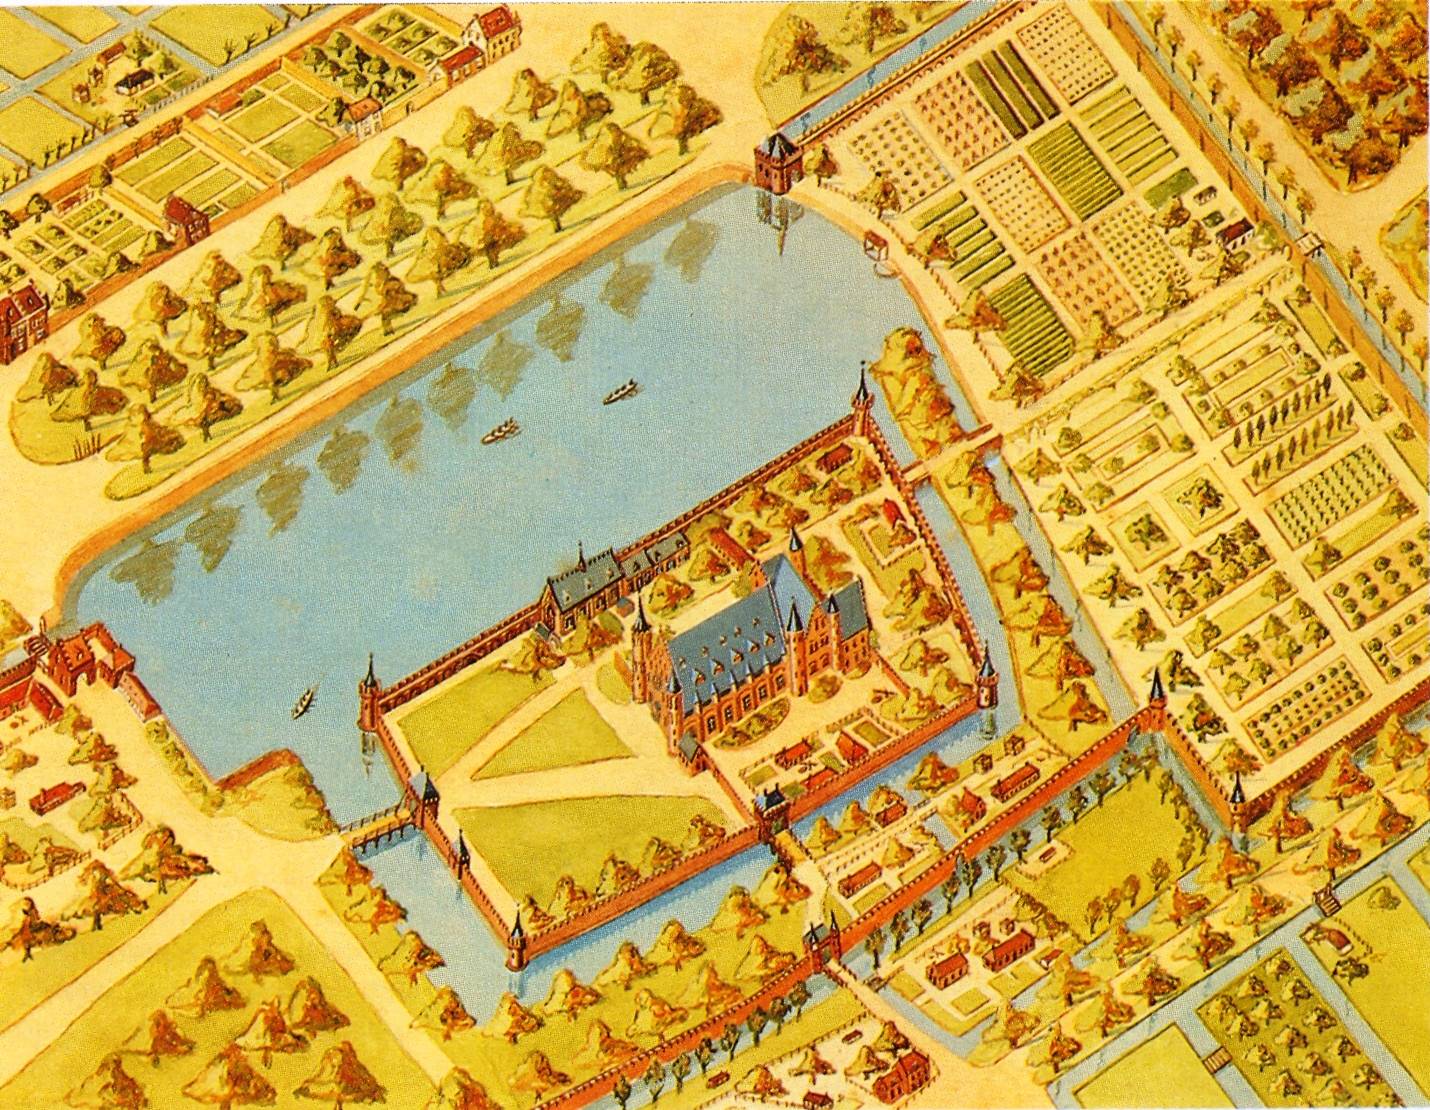 Hof in Den Haag circa 1300